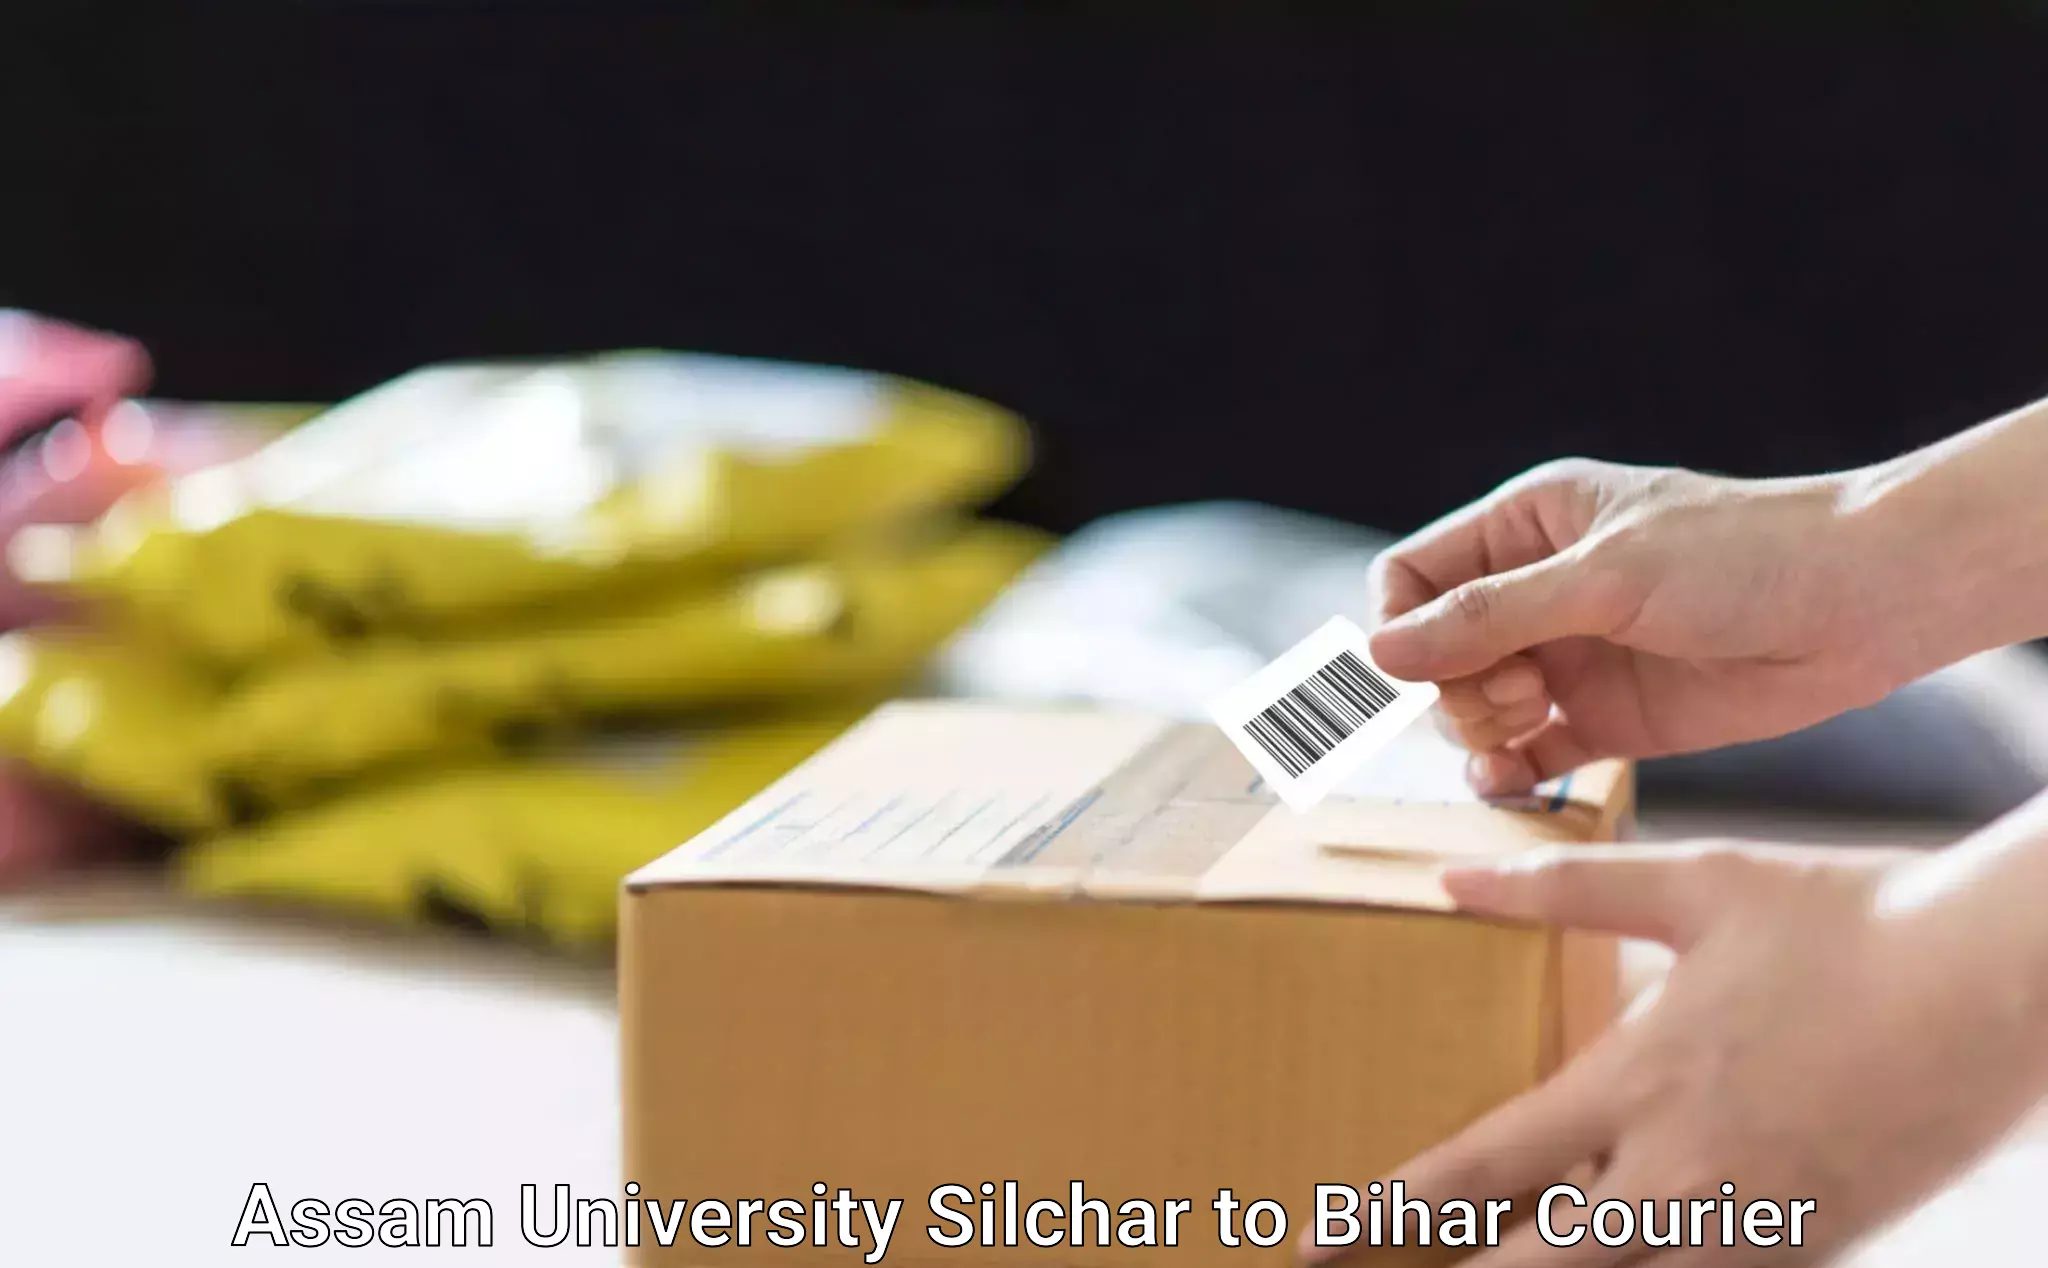 Express delivery network Assam University Silchar to Bhagalpur